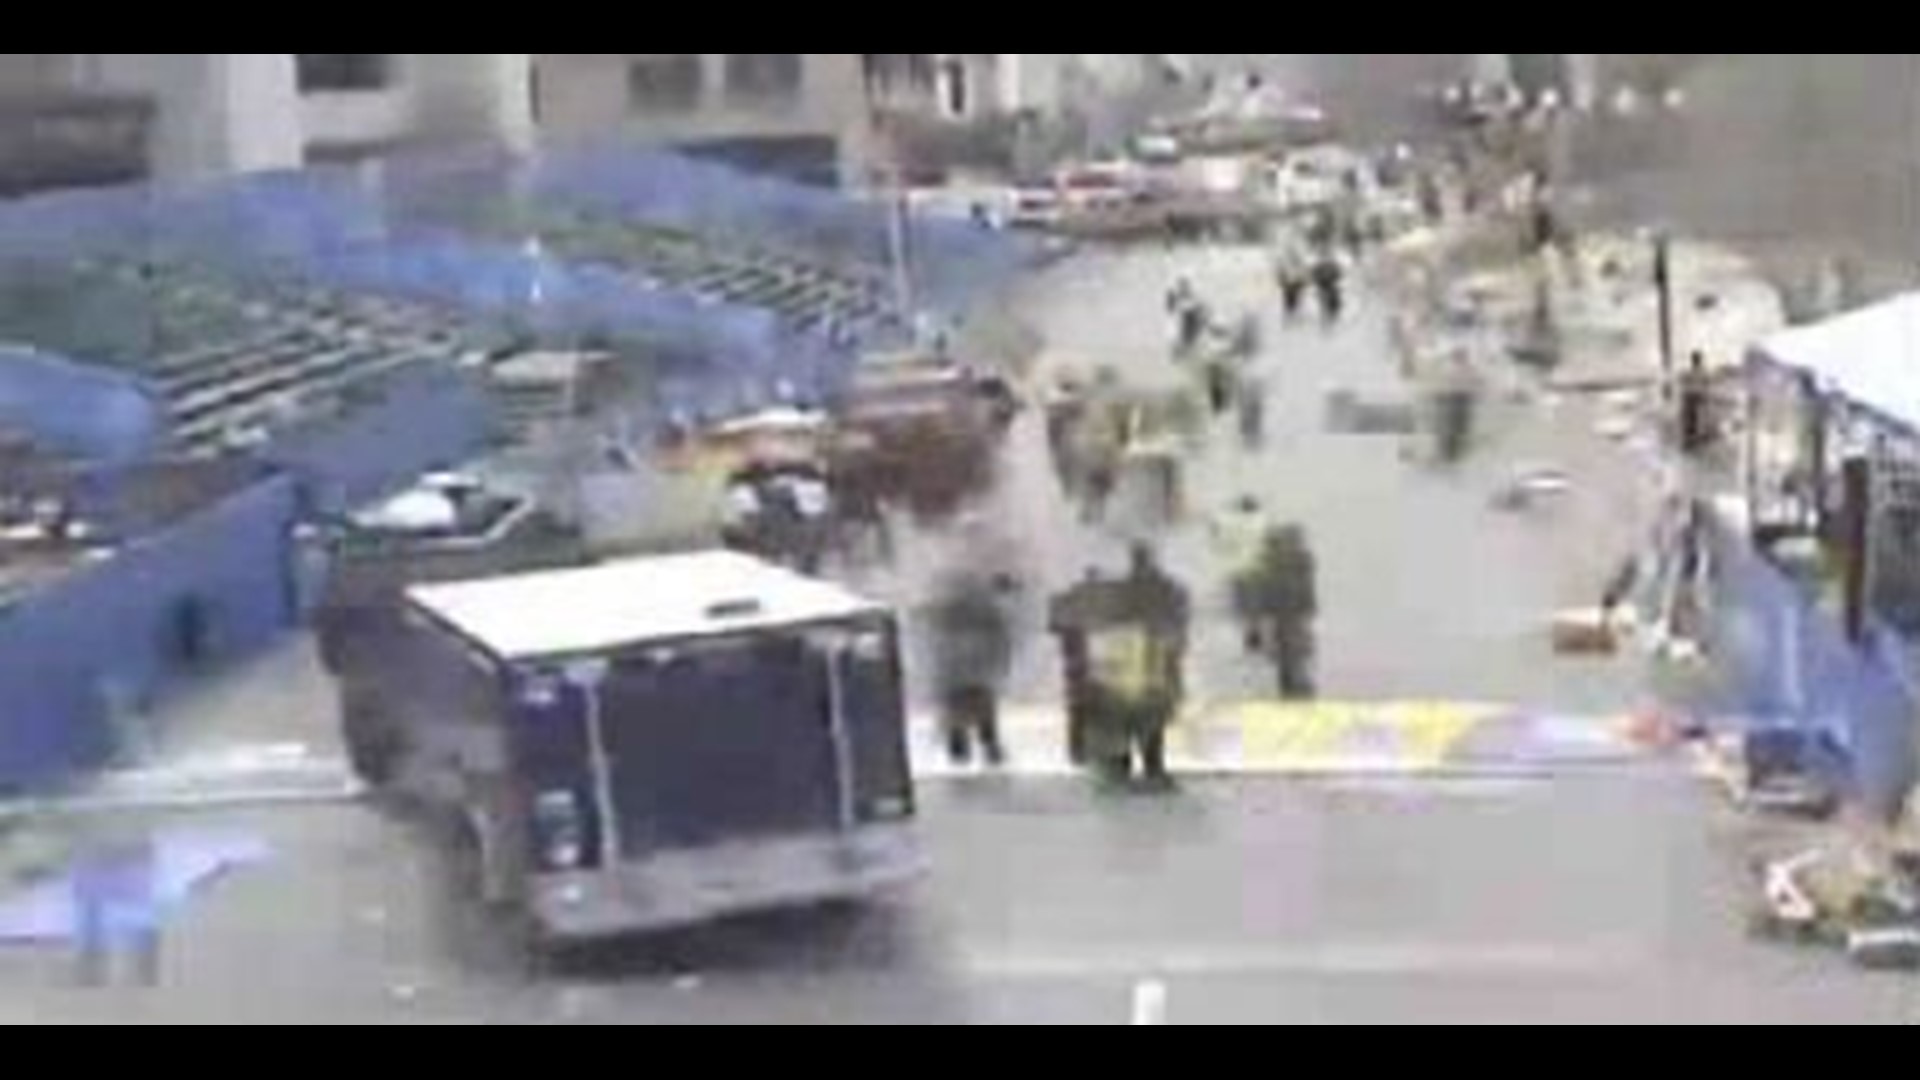 Time lapse video captured at Boston Marathon finish line